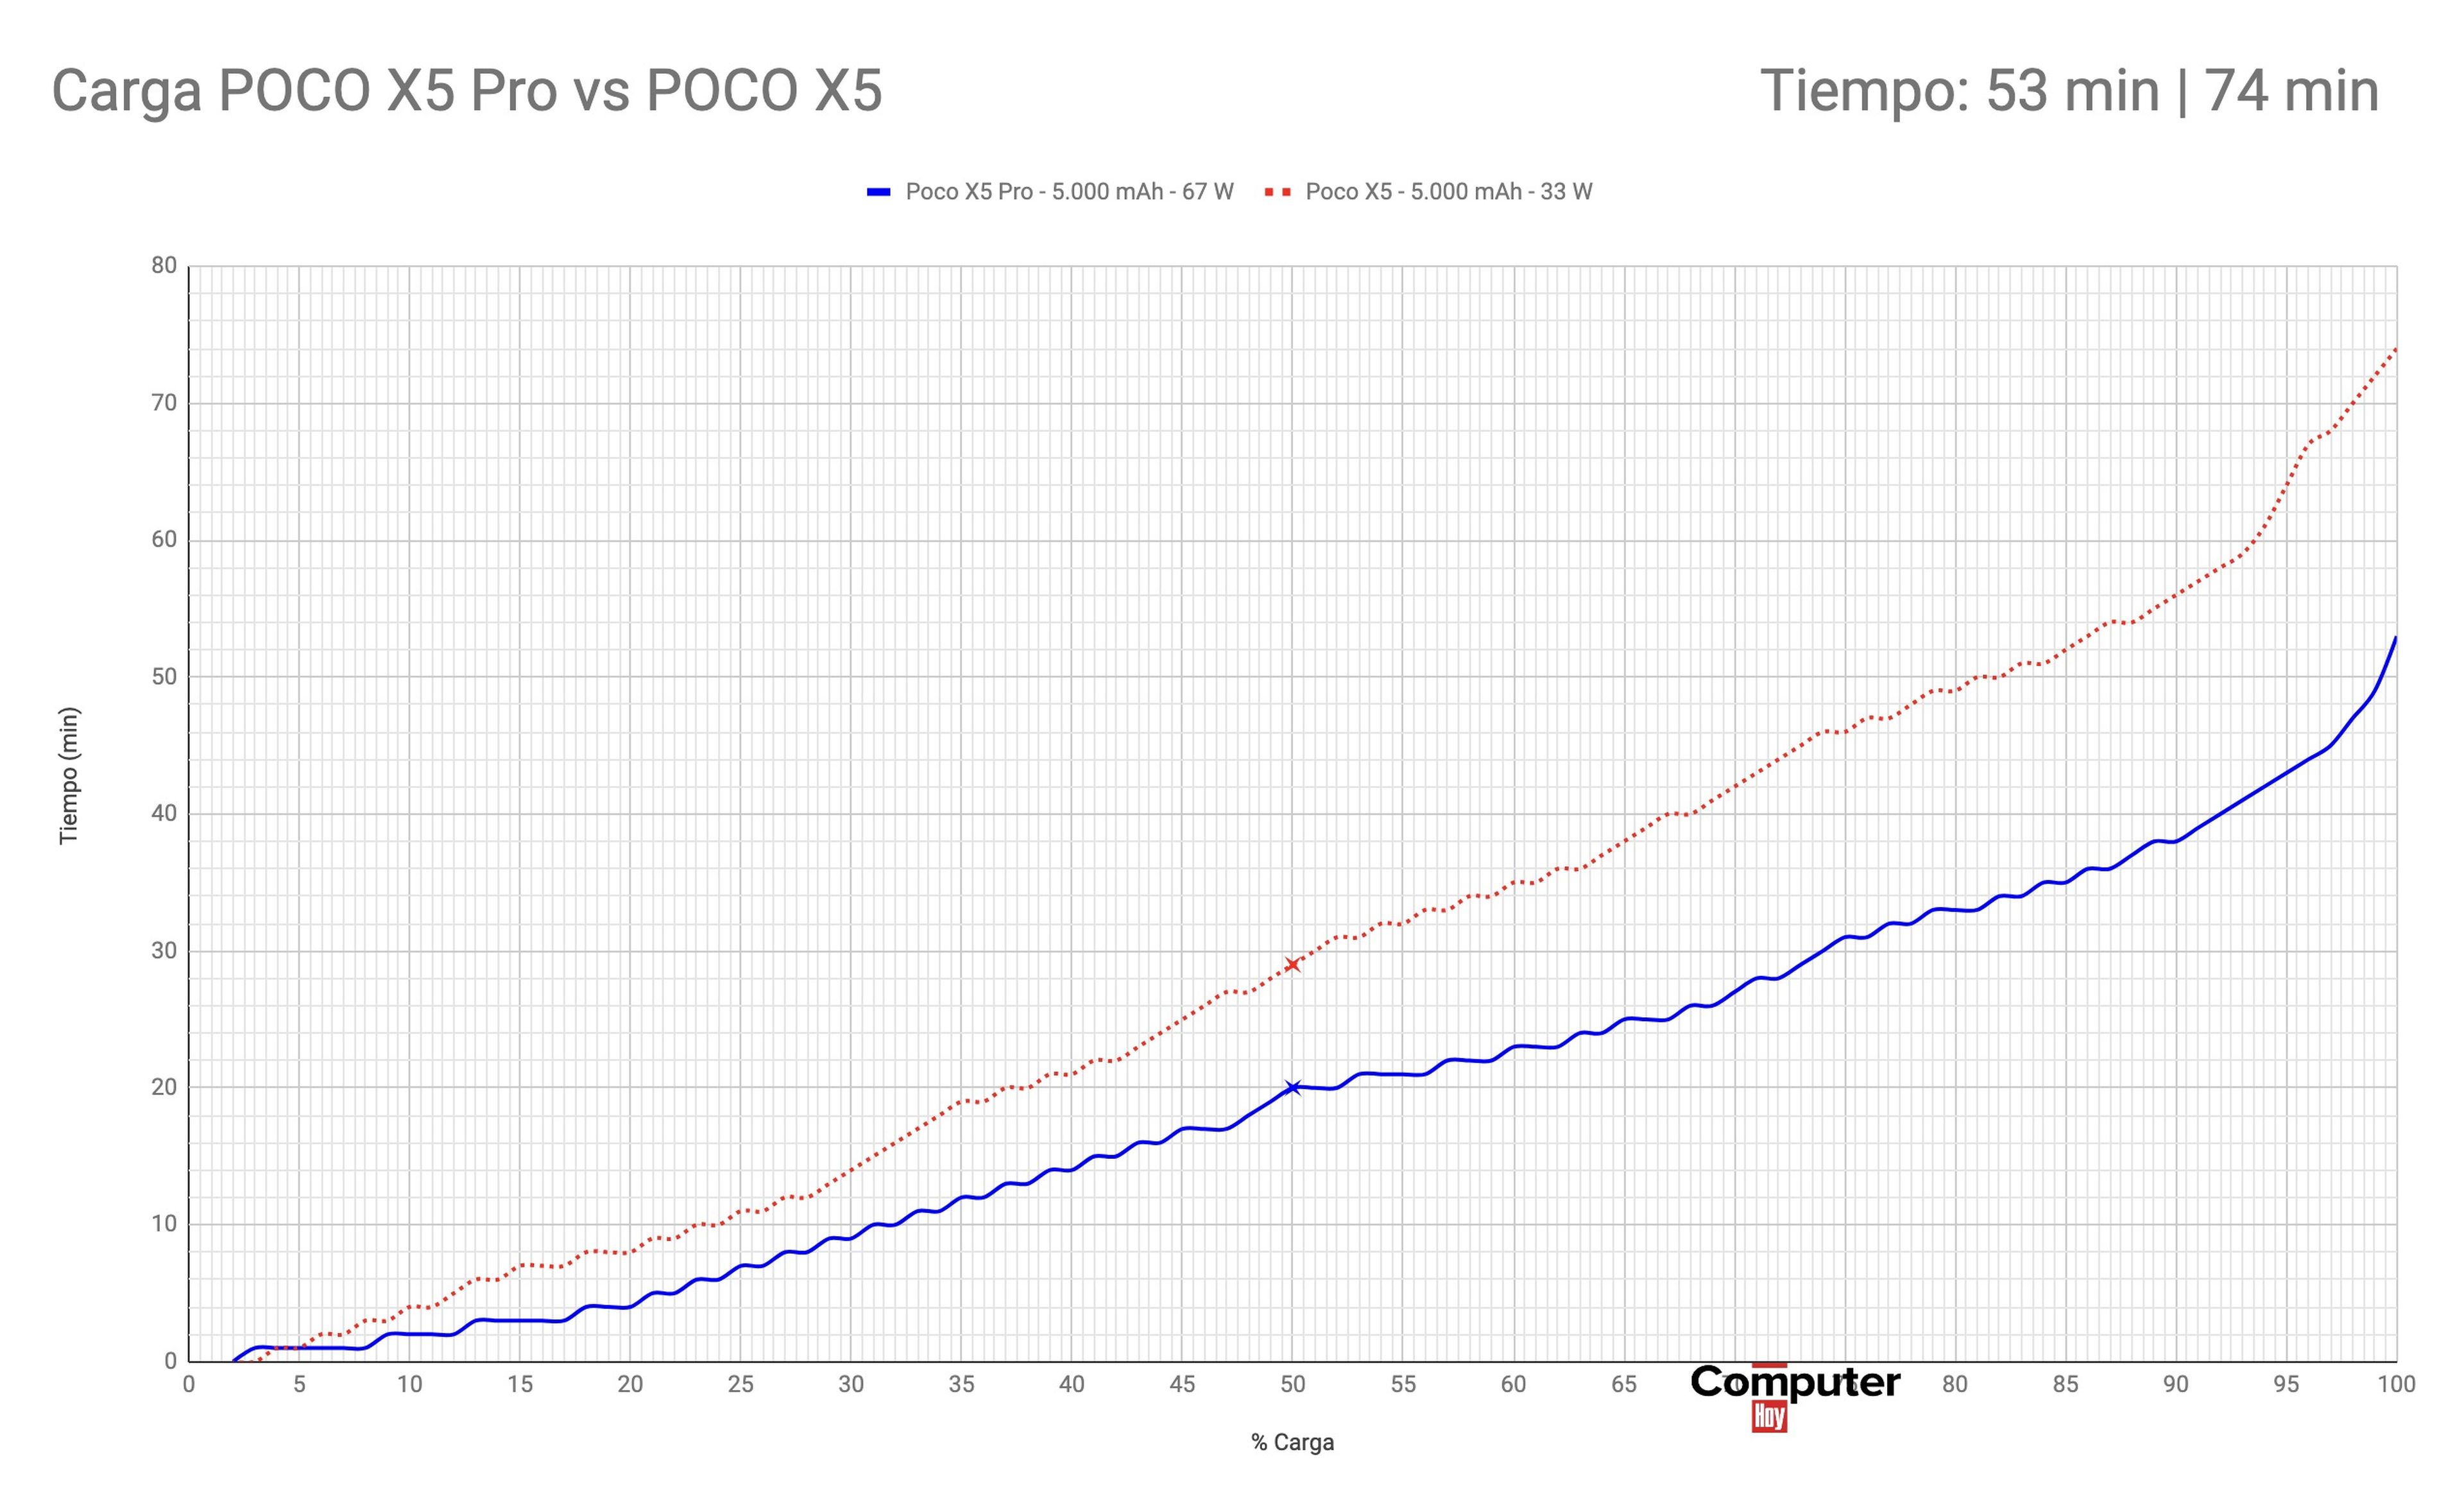 Carga Poco X5 Pro vs Poco X5